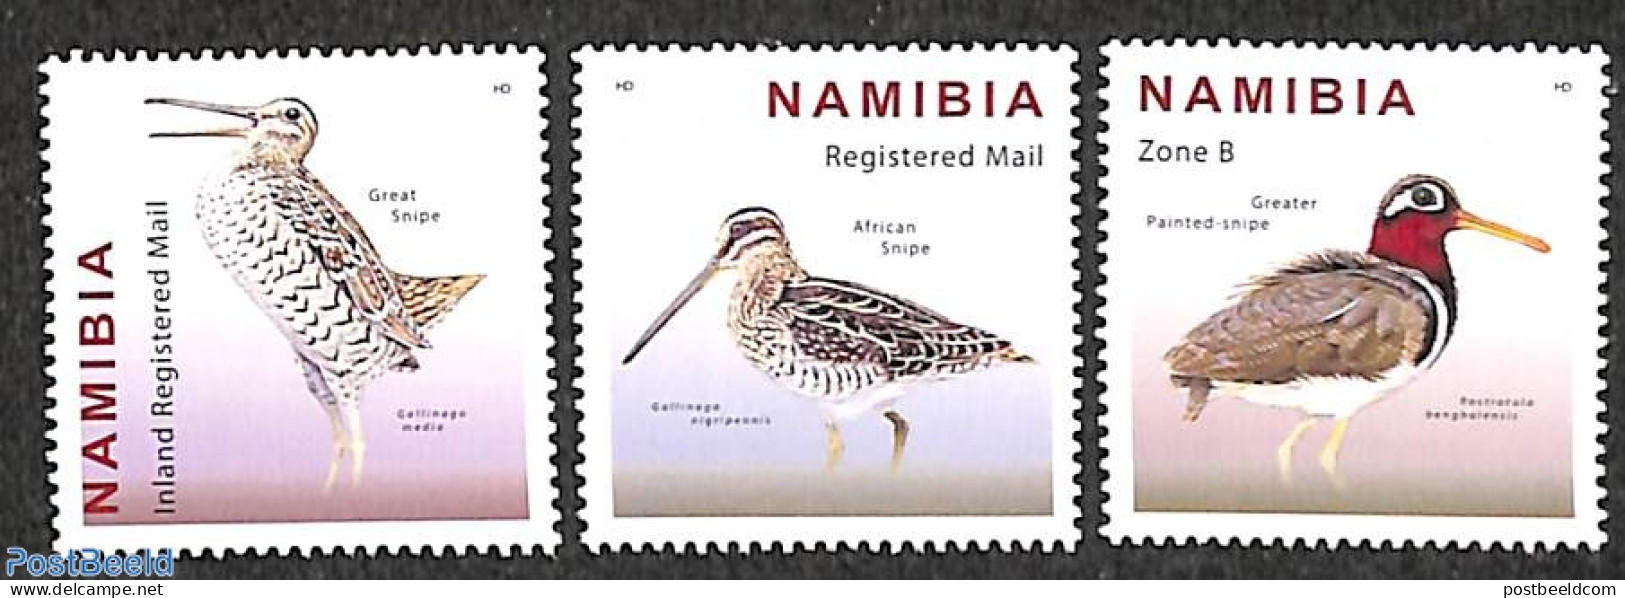 Namibia 2021 Birds 3v, Mint NH, Nature - Birds - Namibie (1990- ...)